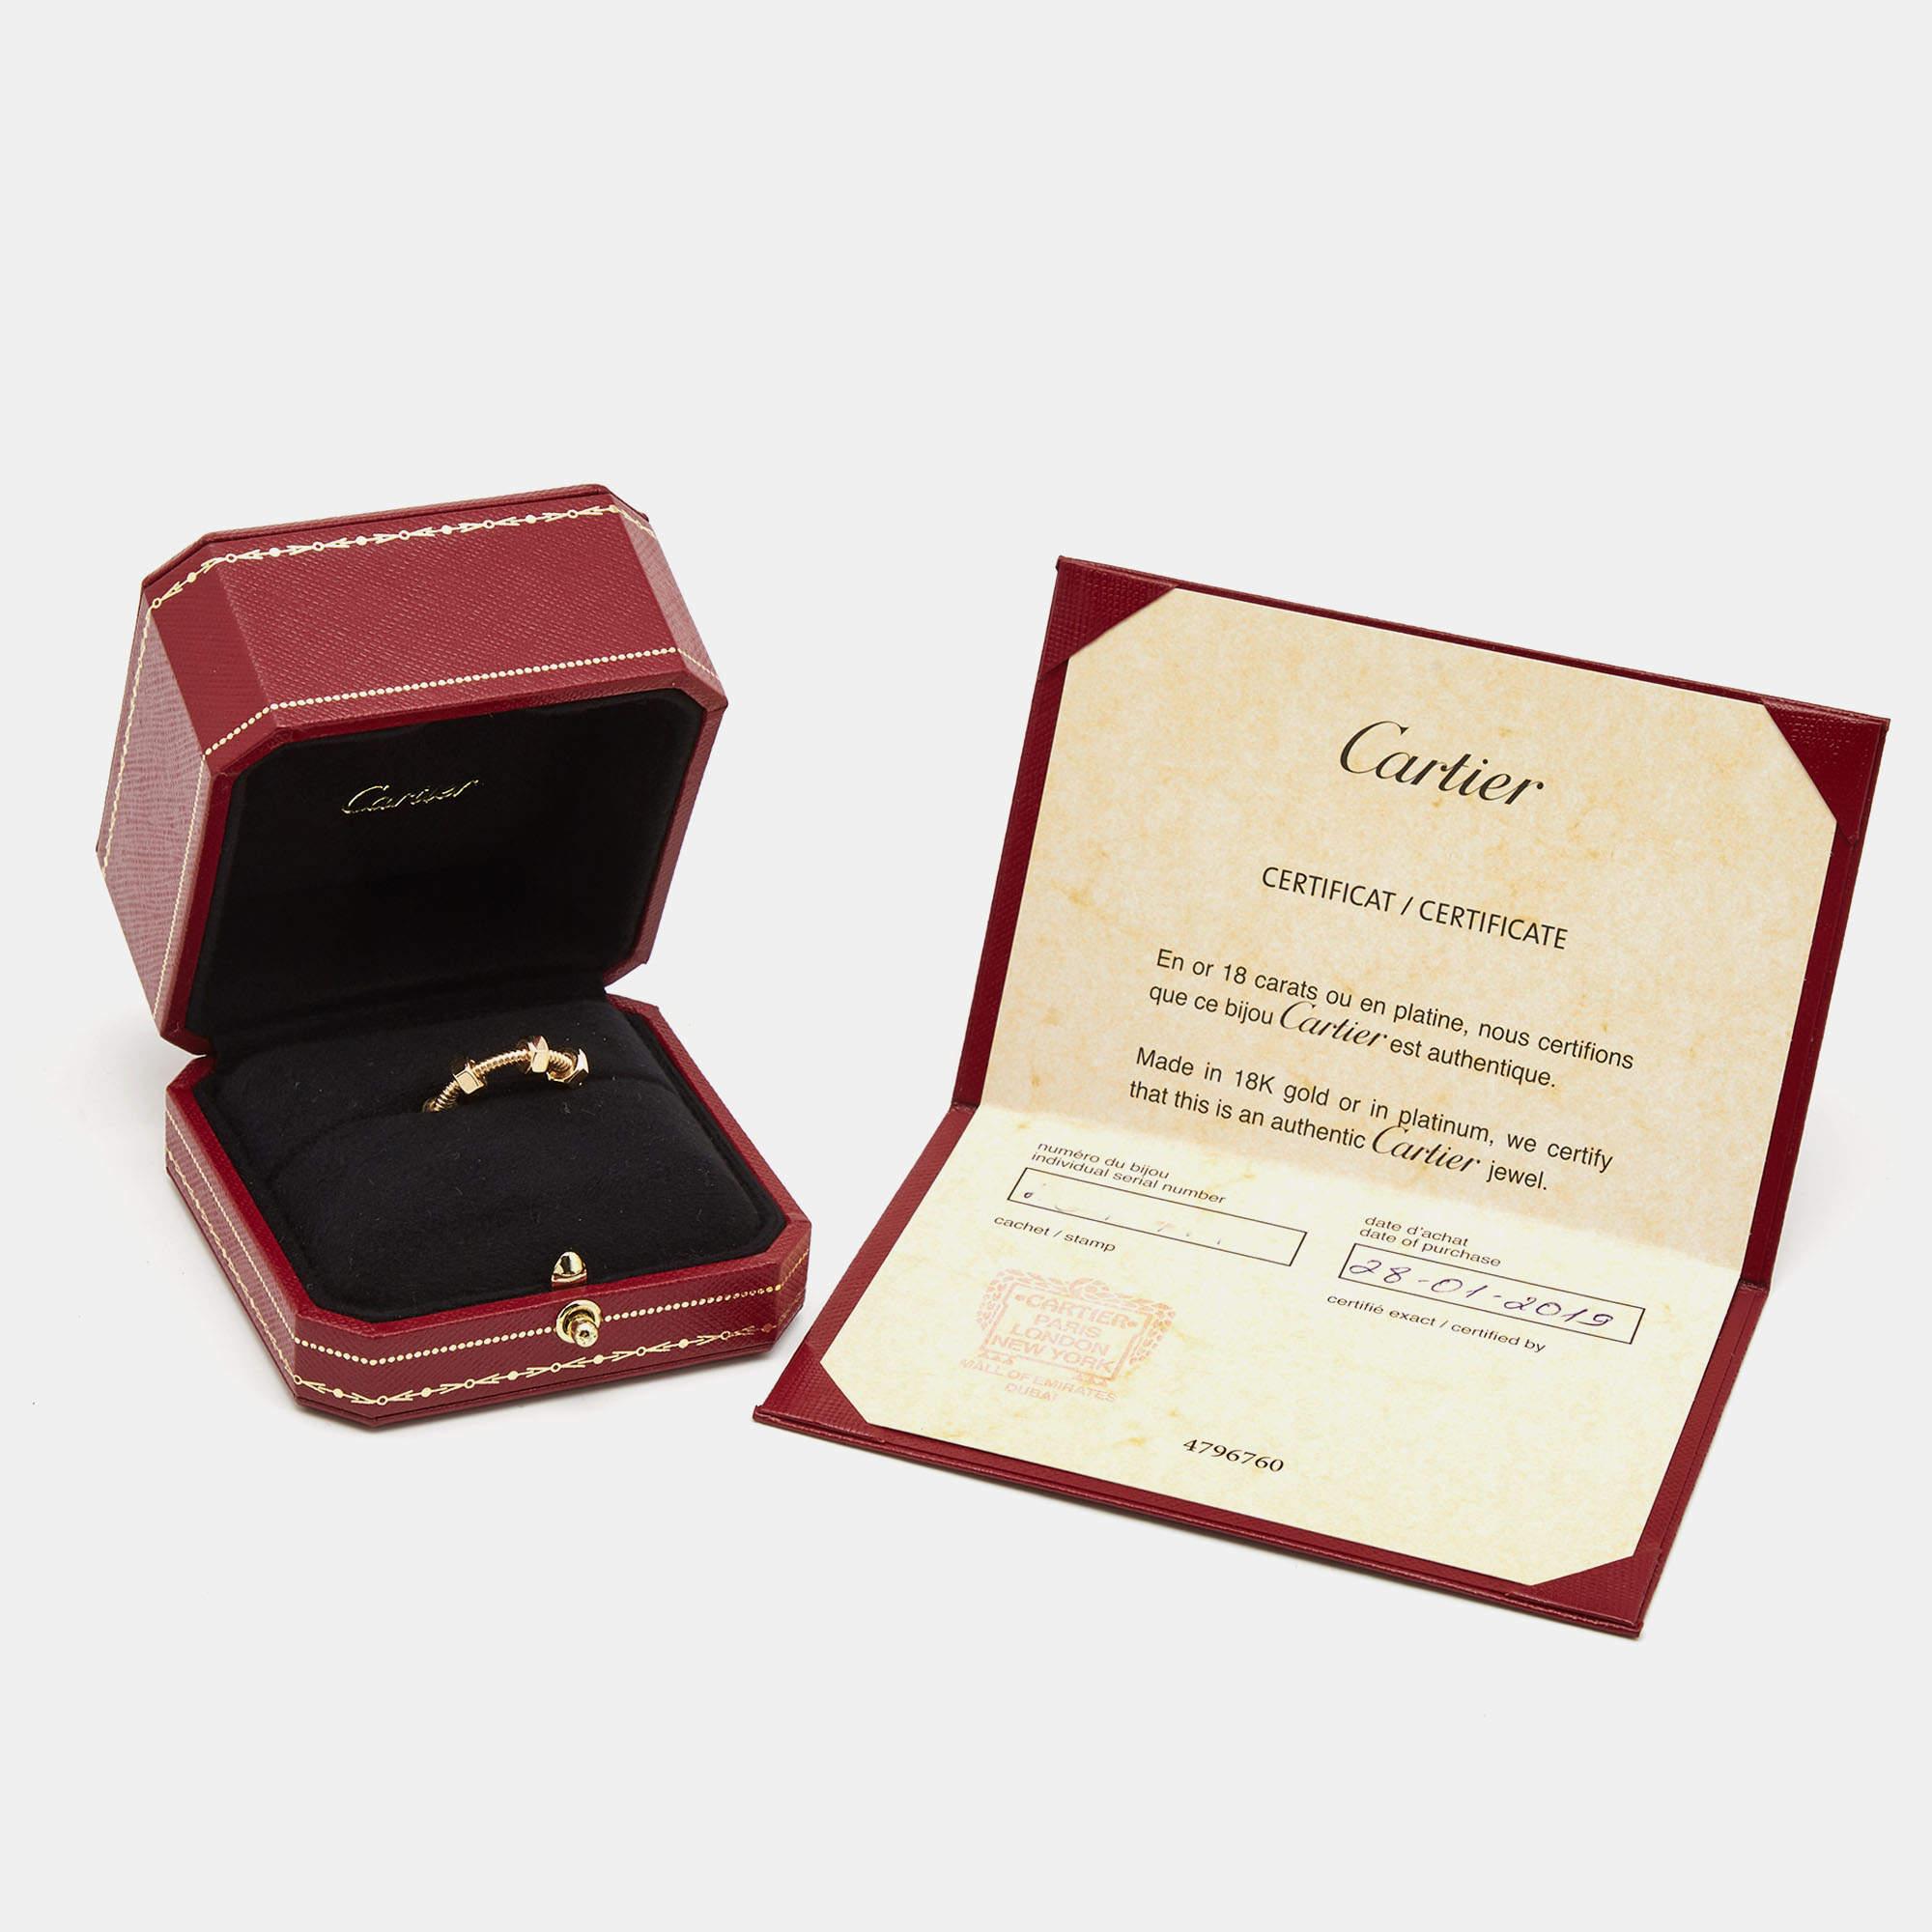 Cartier Ecrou De Cartier 18k Rose Gold Ring Size 50 2